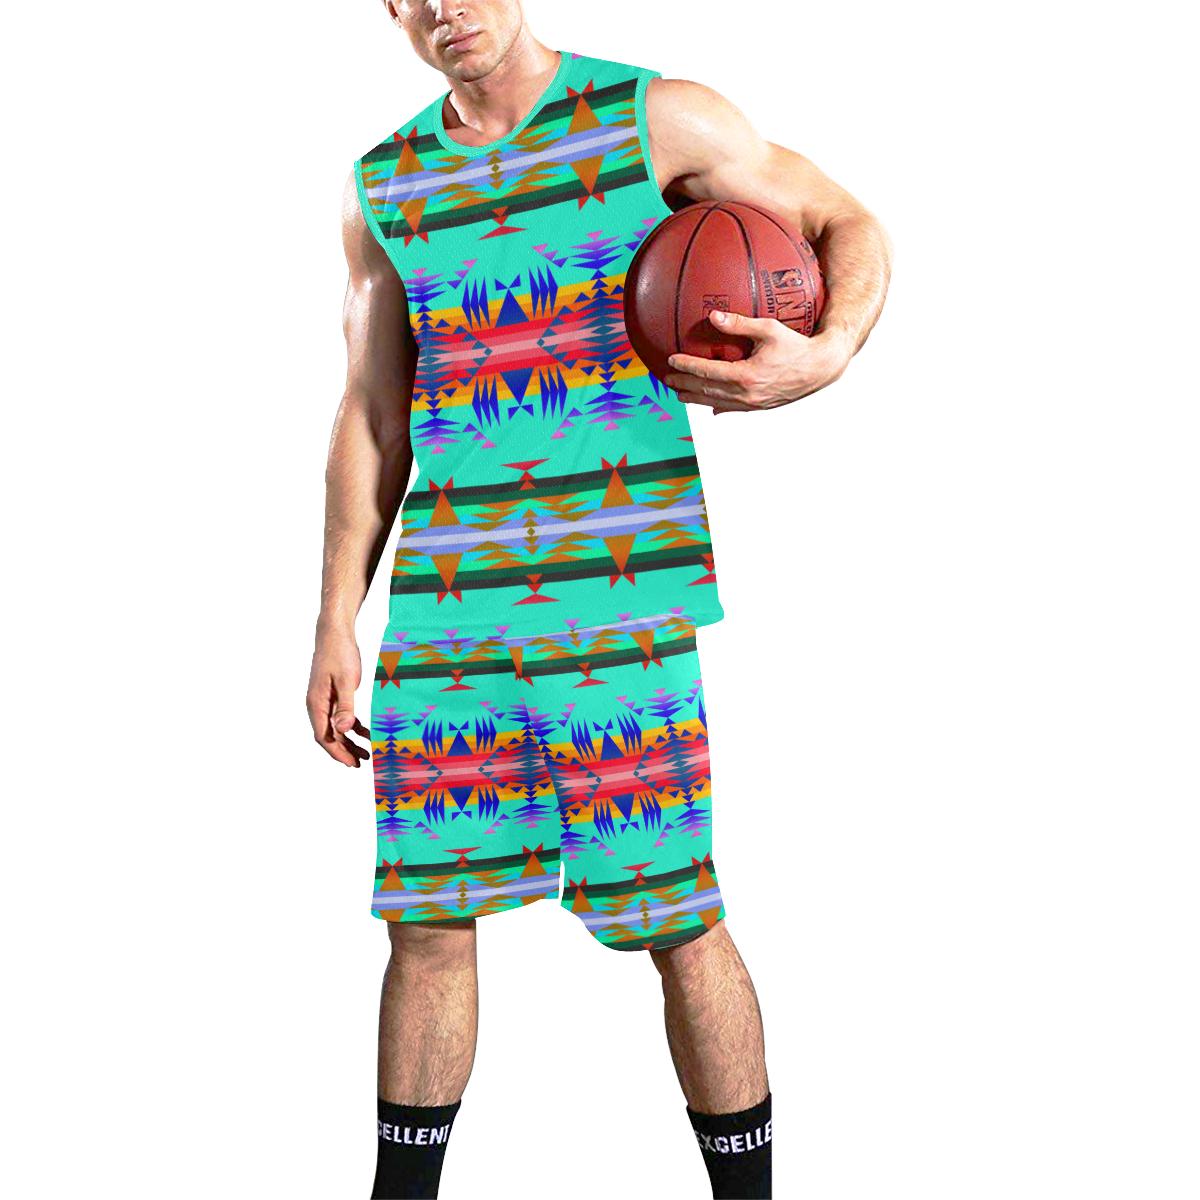 Between the Mountains Spring All Over Print Basketball Uniform Basketball Uniform e-joyer 